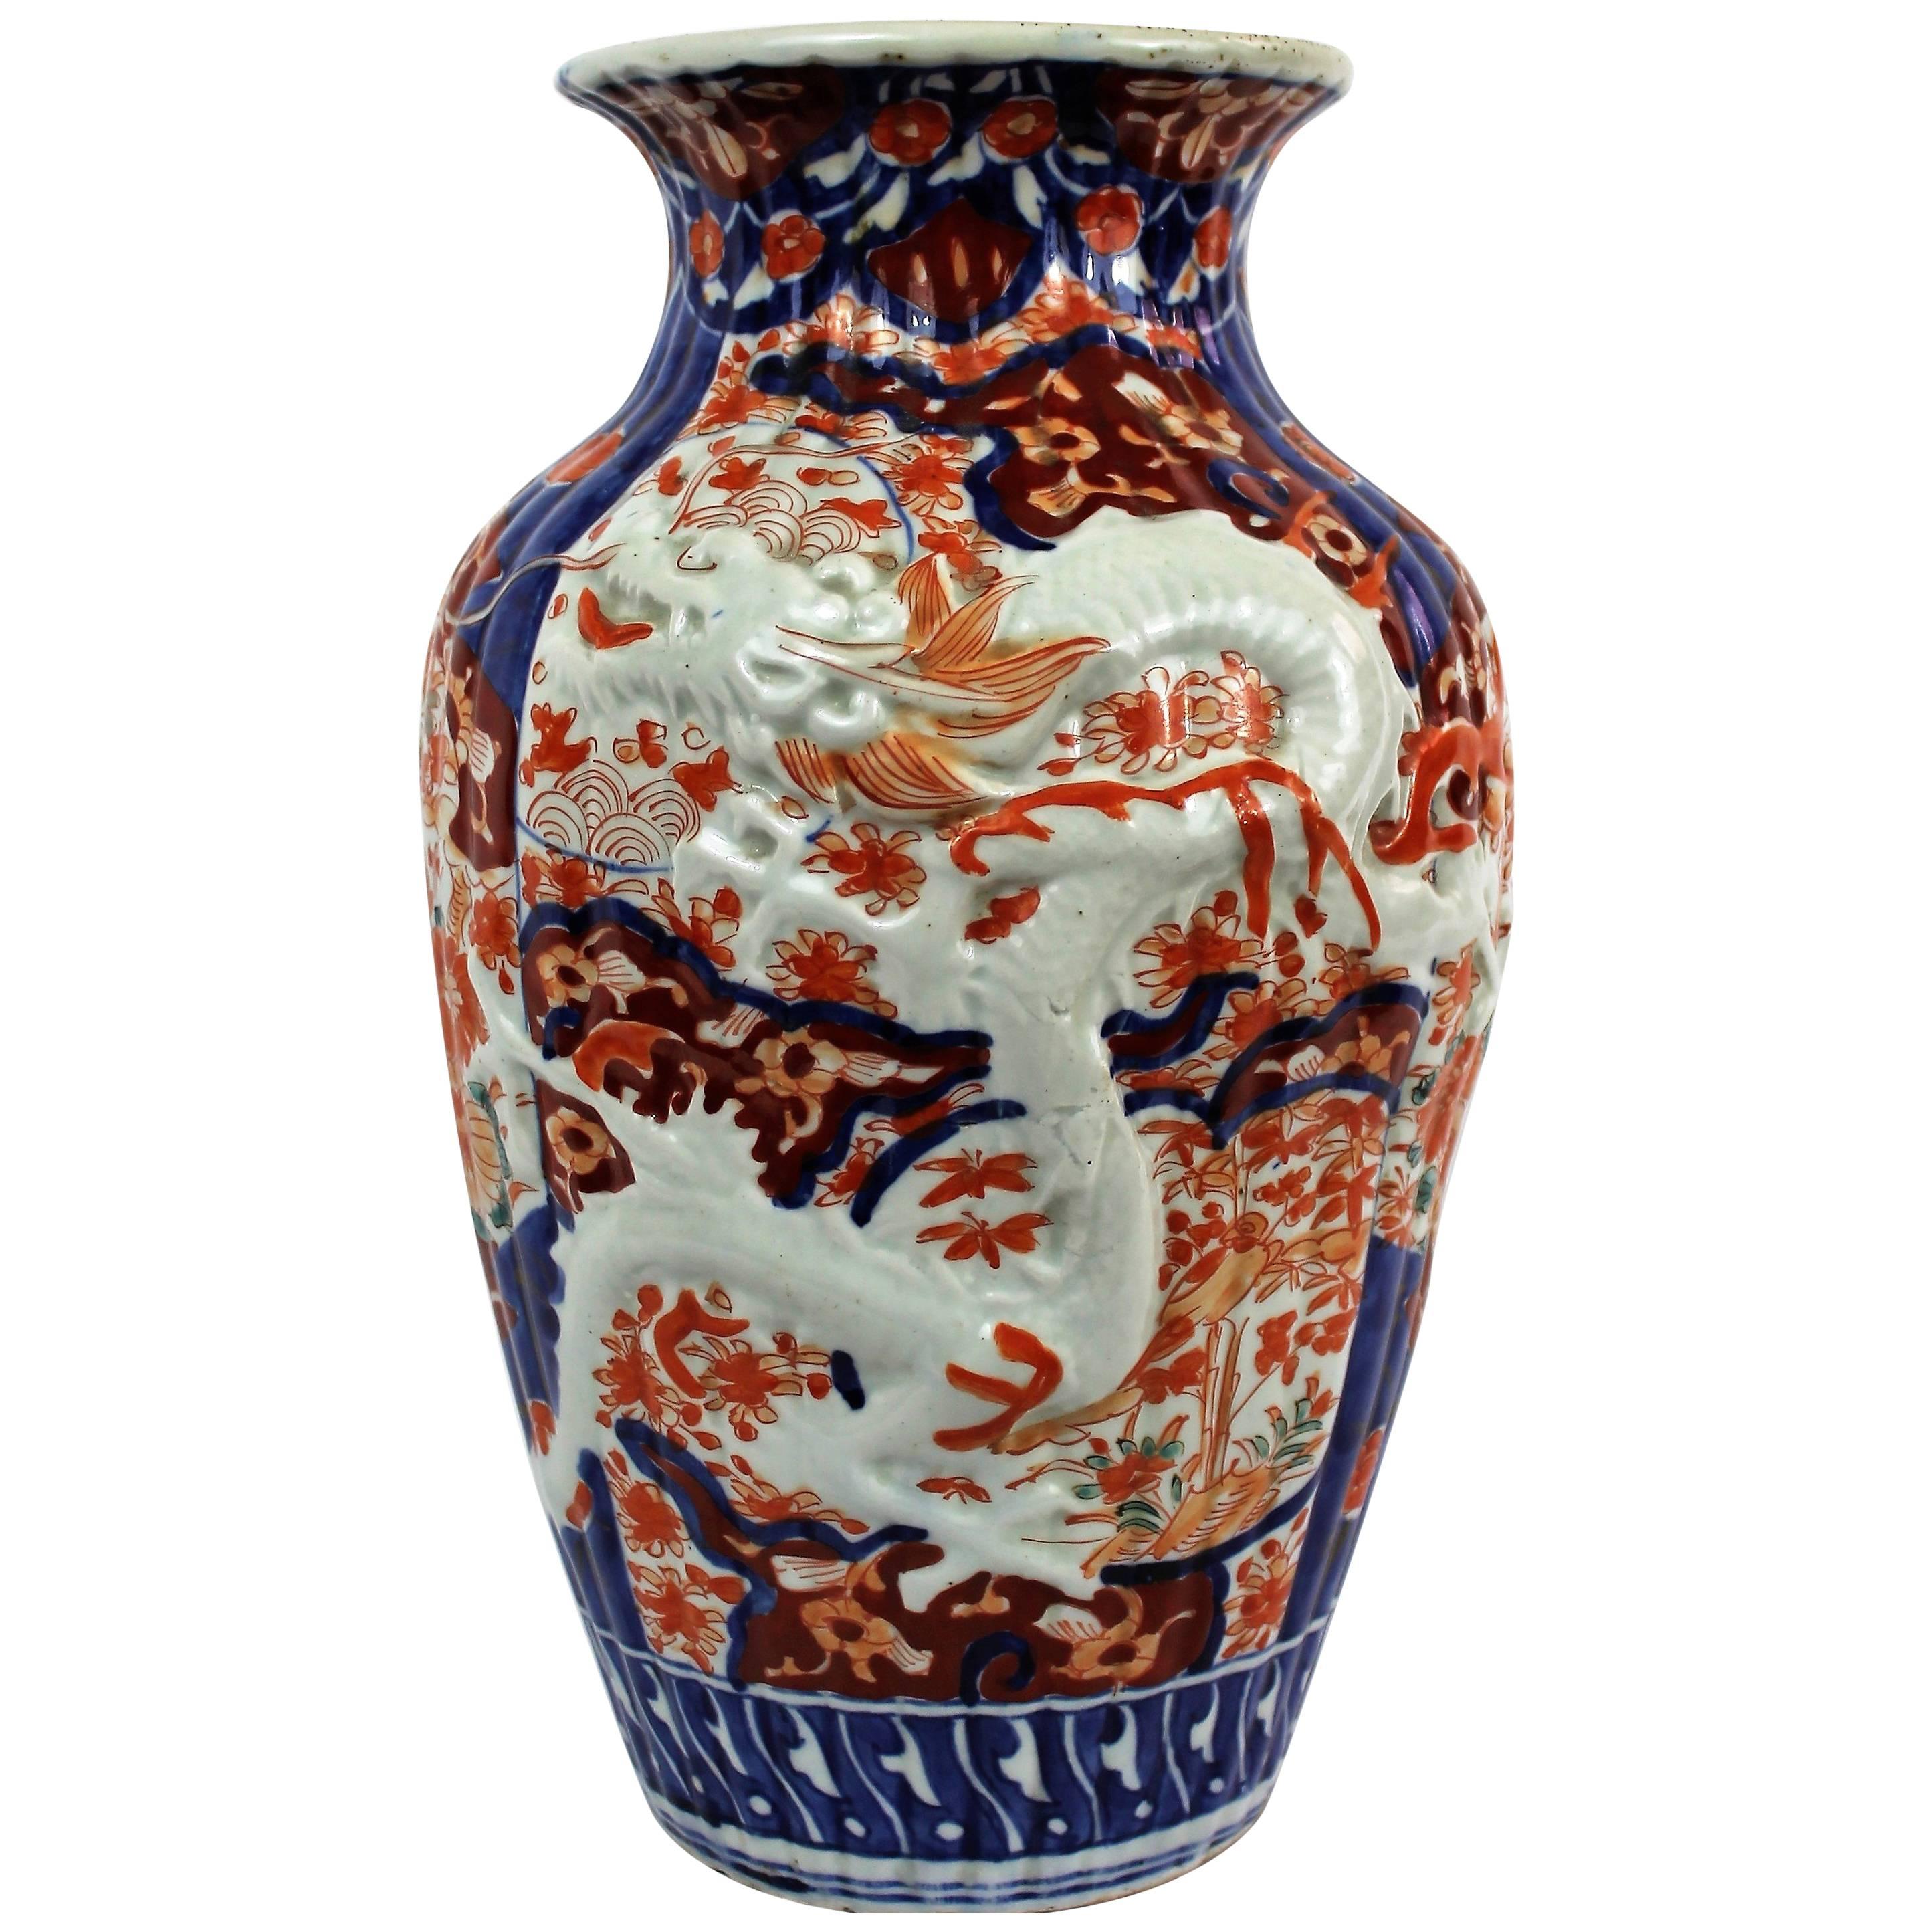 19th Century Imari Porcelain Baluster Vase with Dragon Relief Decoration Japan For Sale